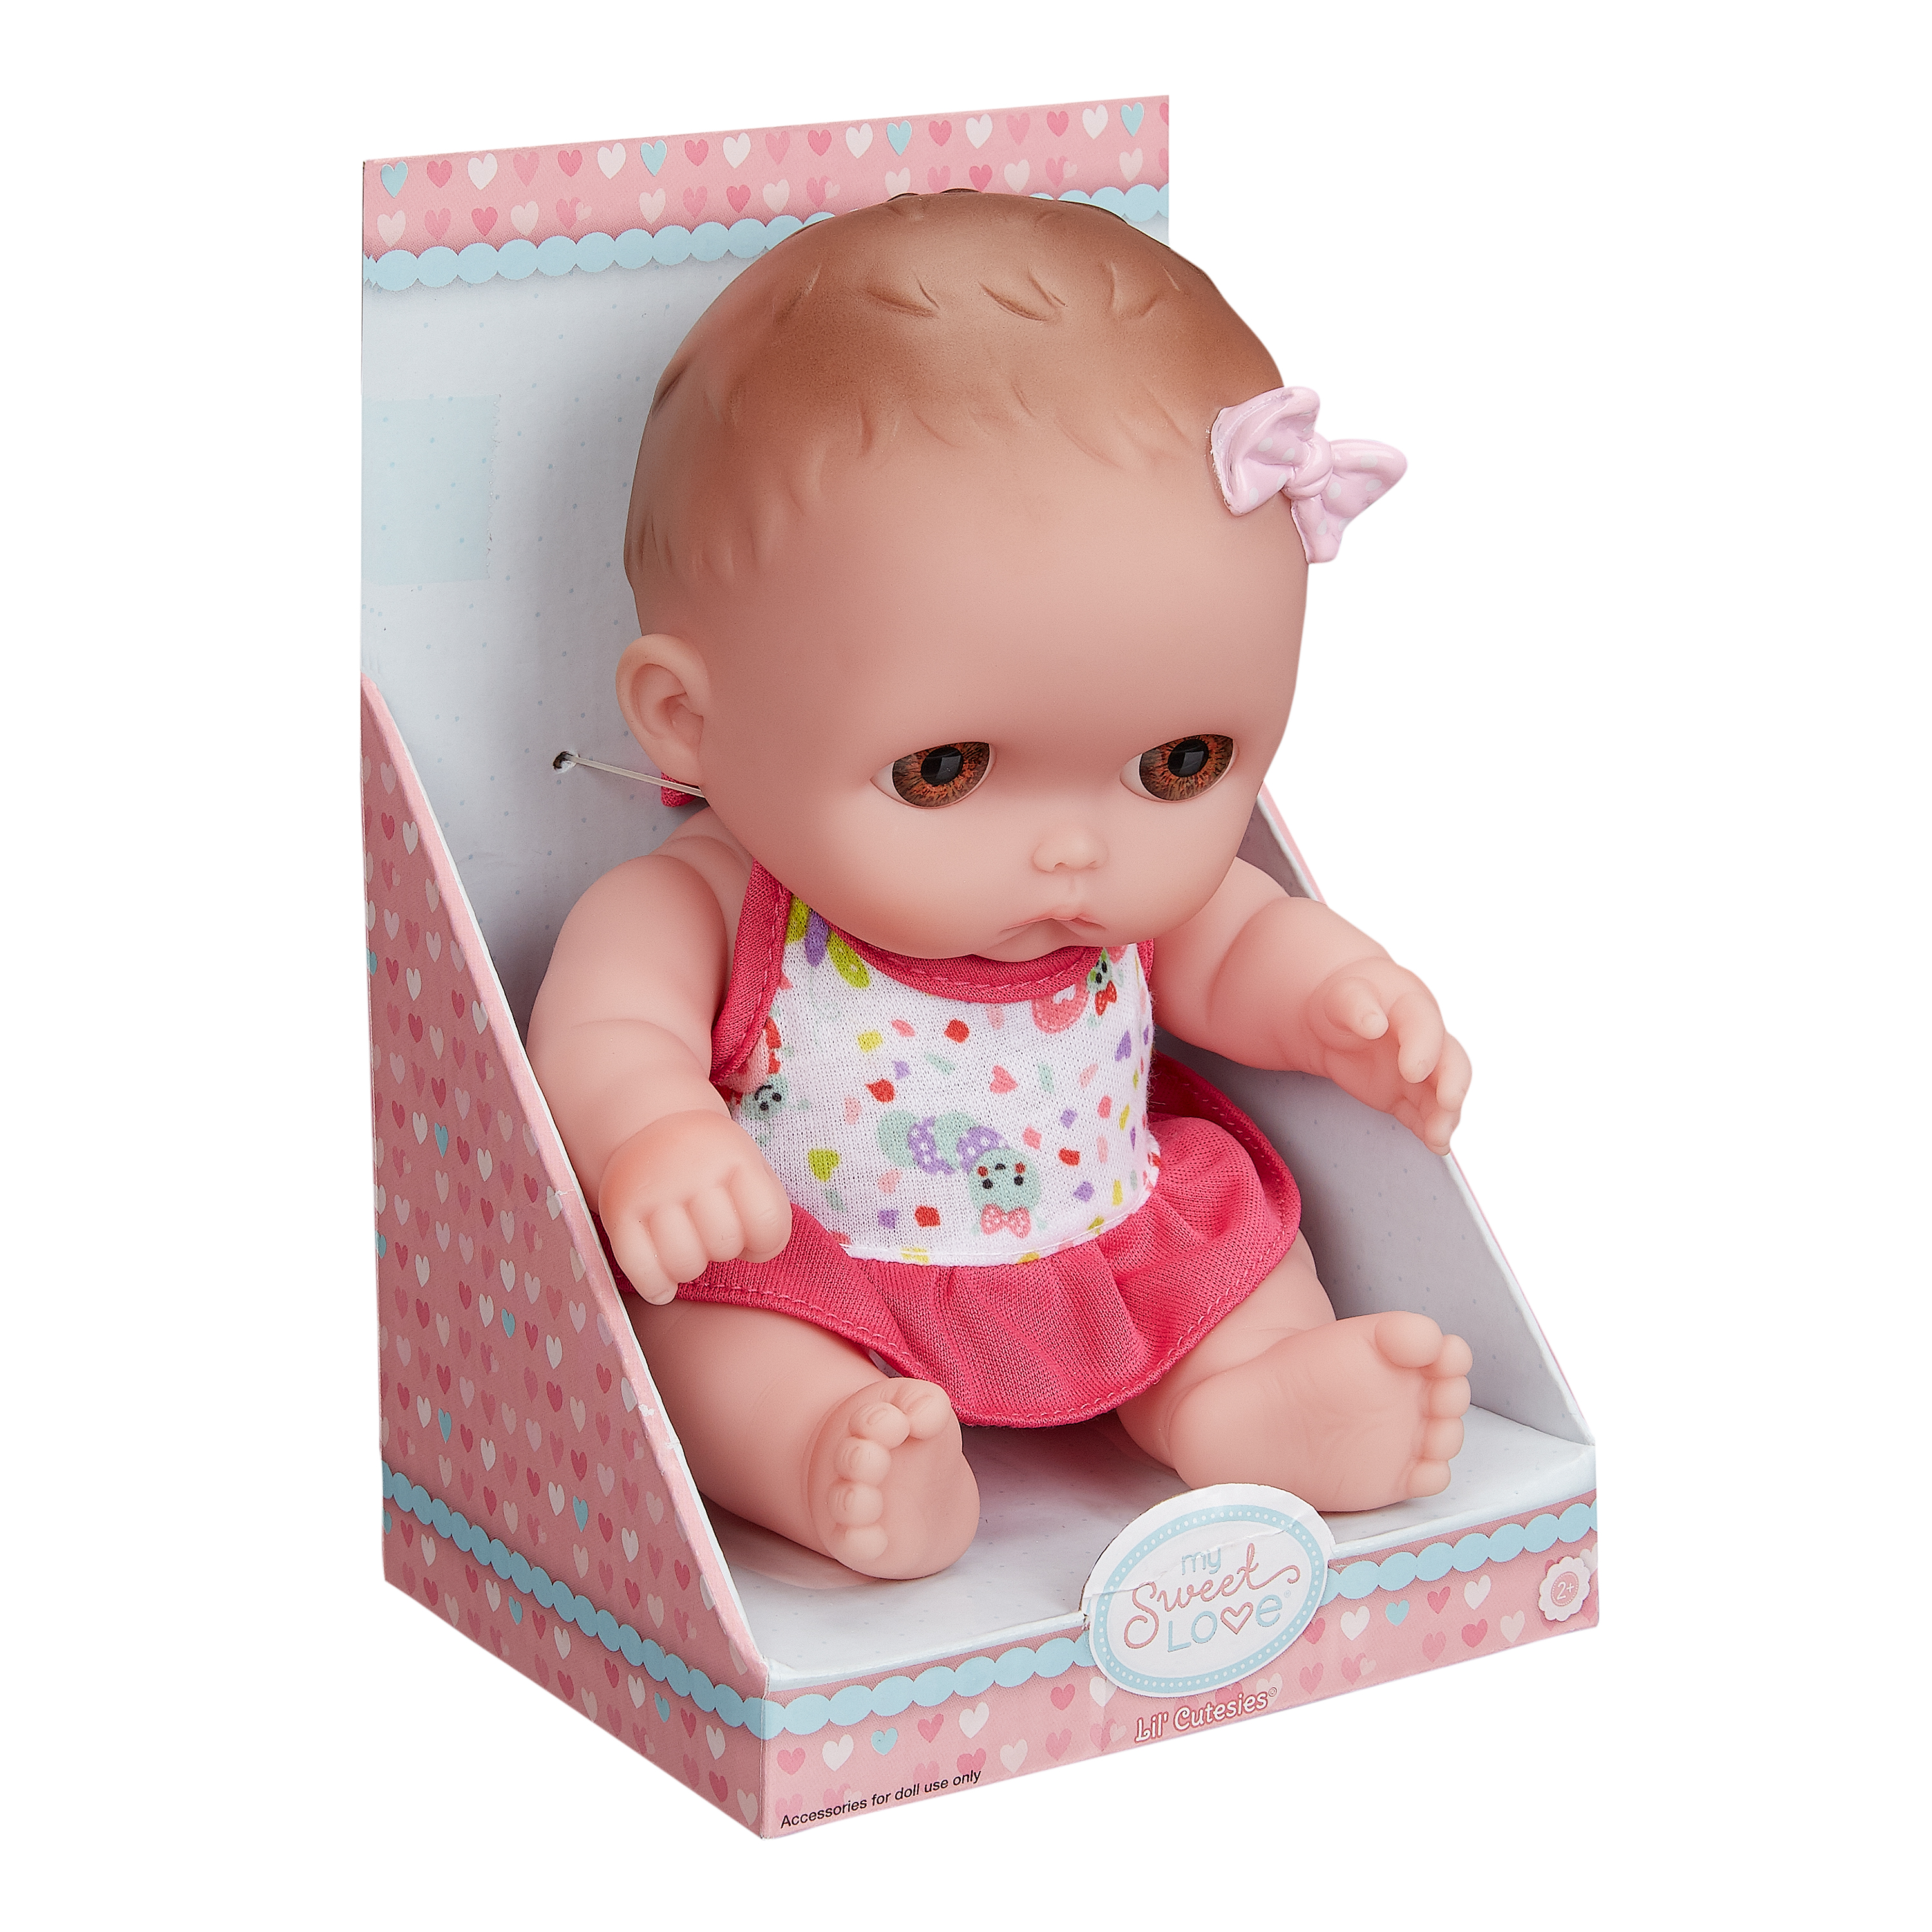 My Sweet Love Lil Cutesies 8.5" Baby Doll - image 2 of 4